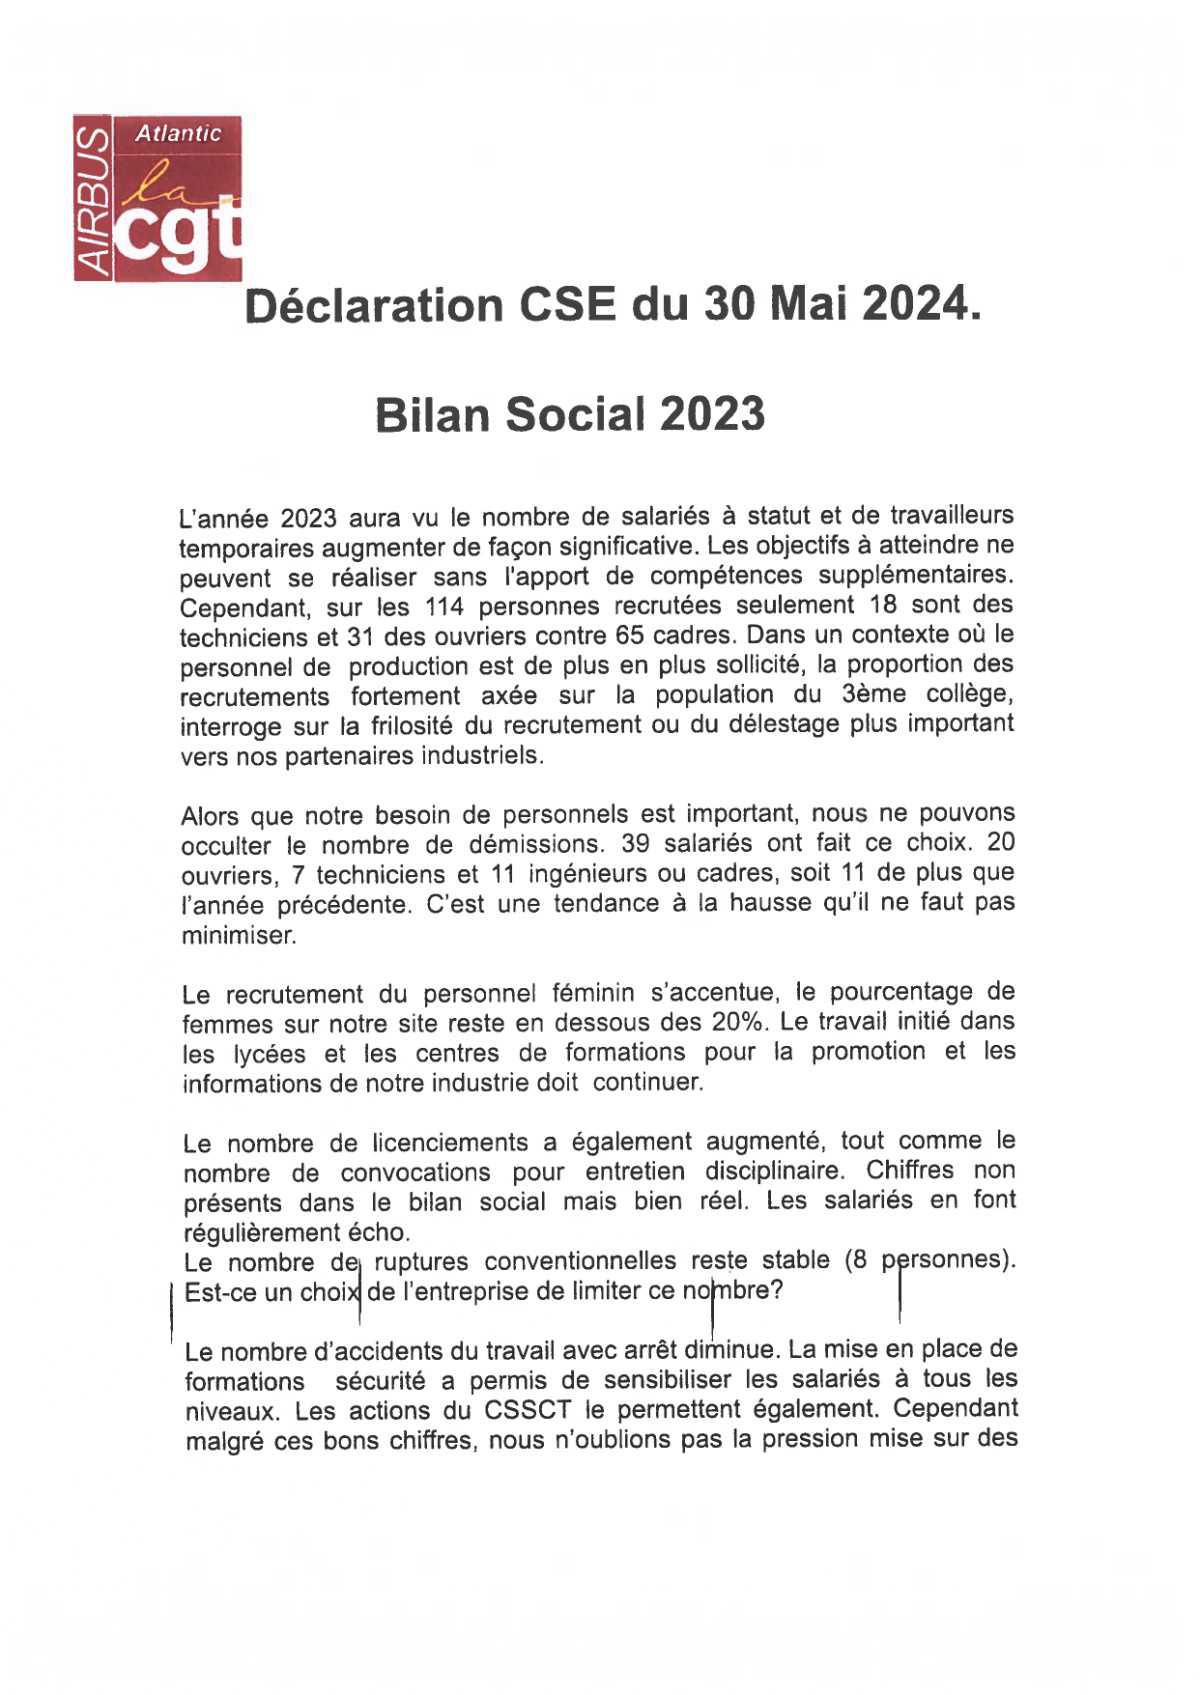 Déclaration CSE : Bilan social 2023